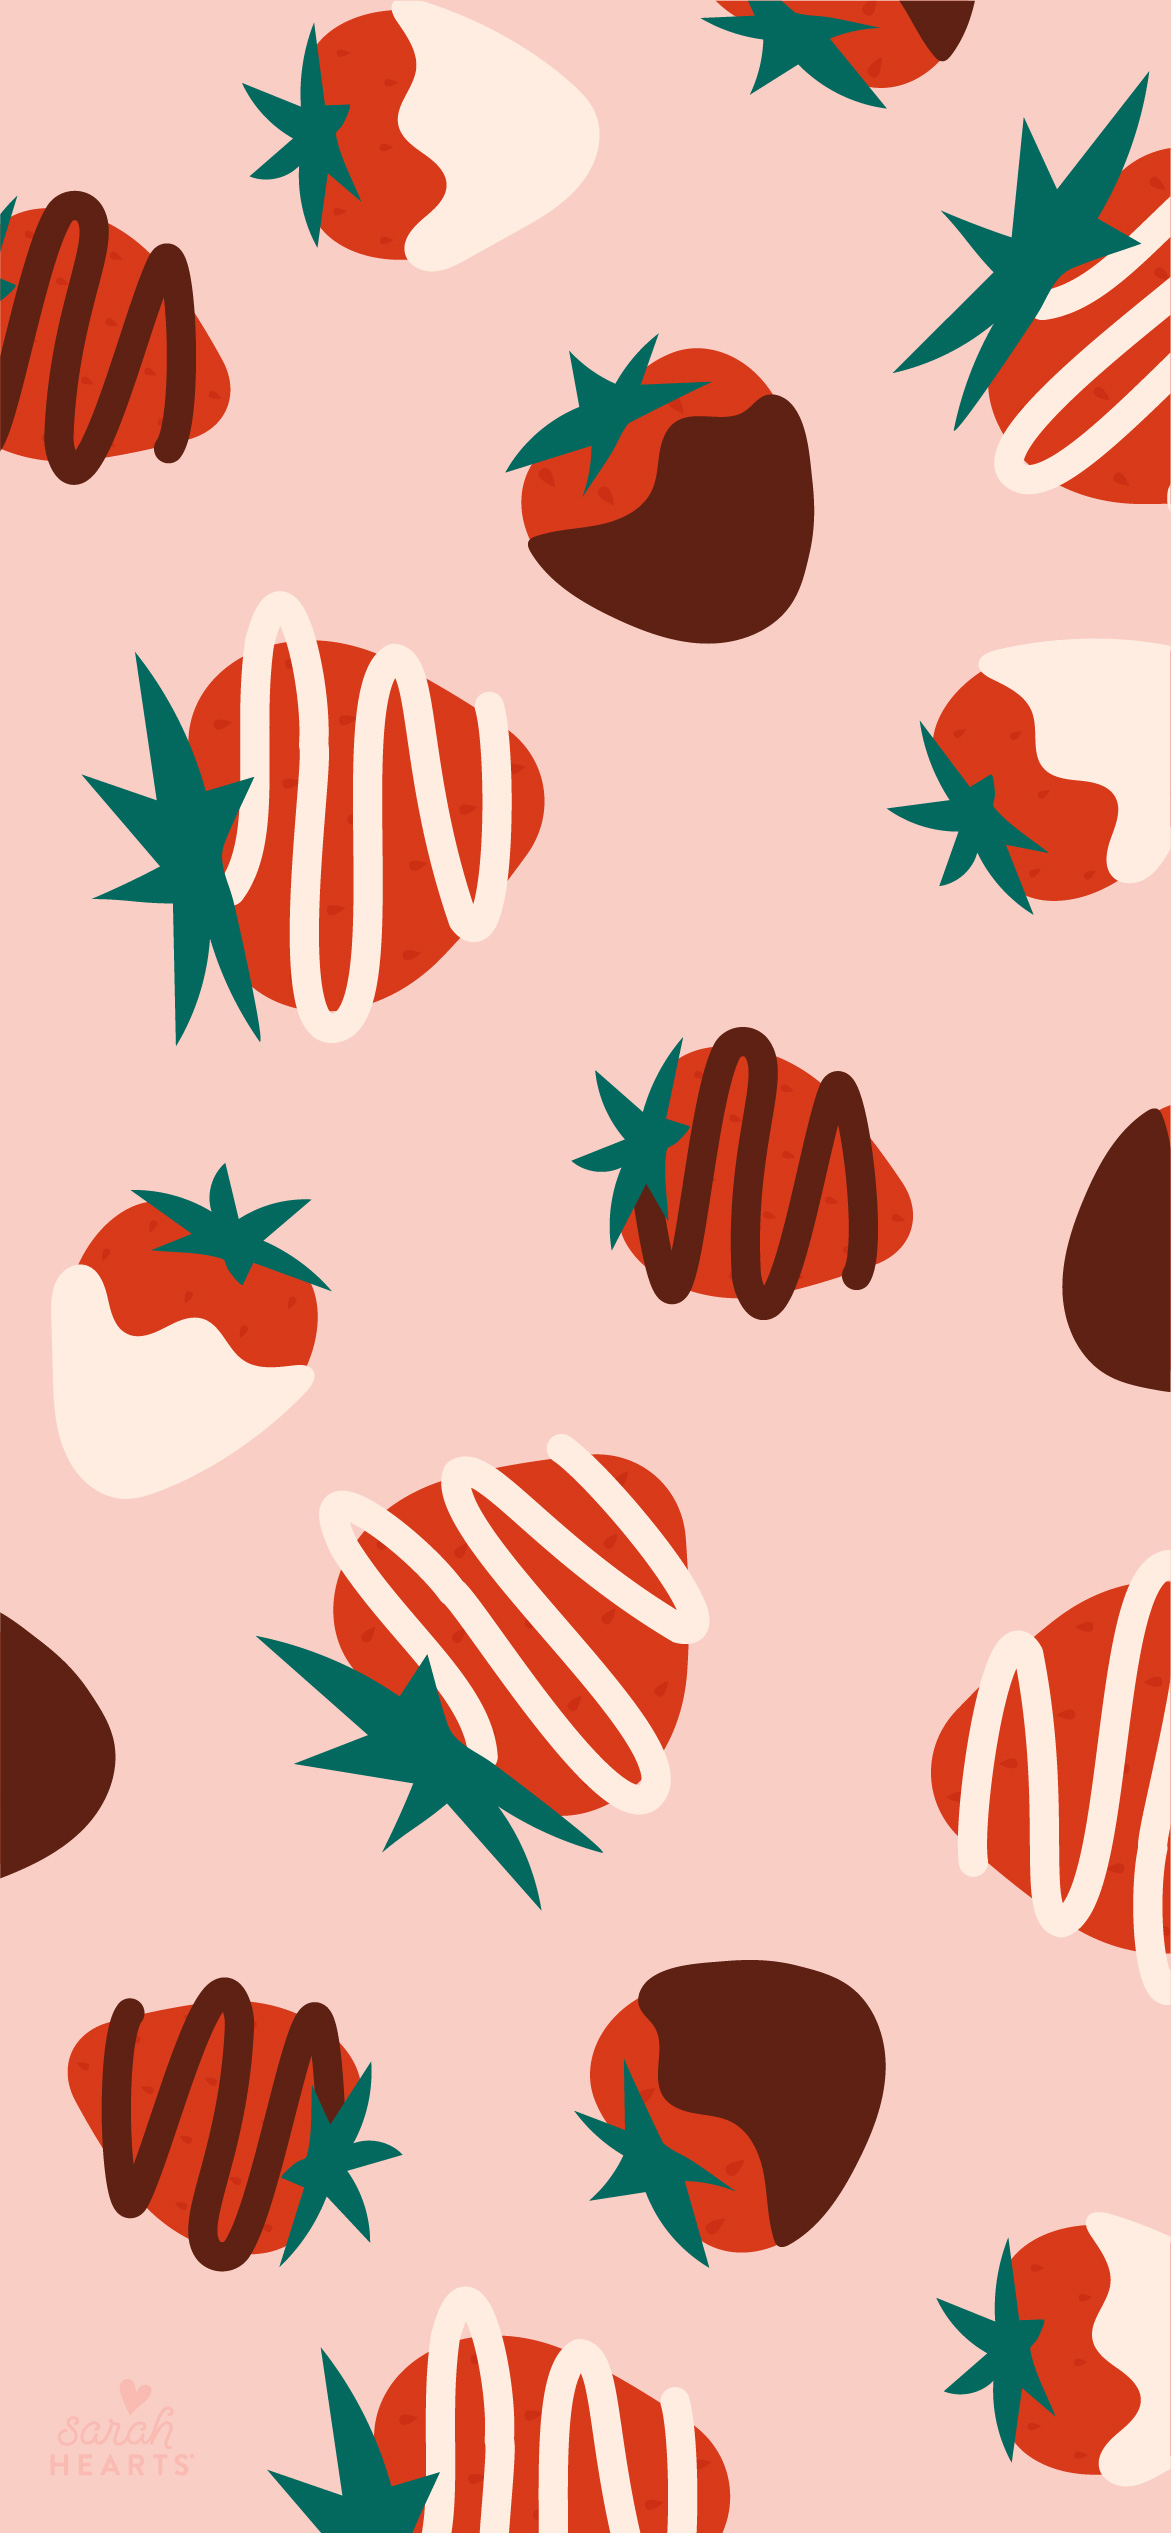 Strawberries Art iPhone Wallpapers Free Download